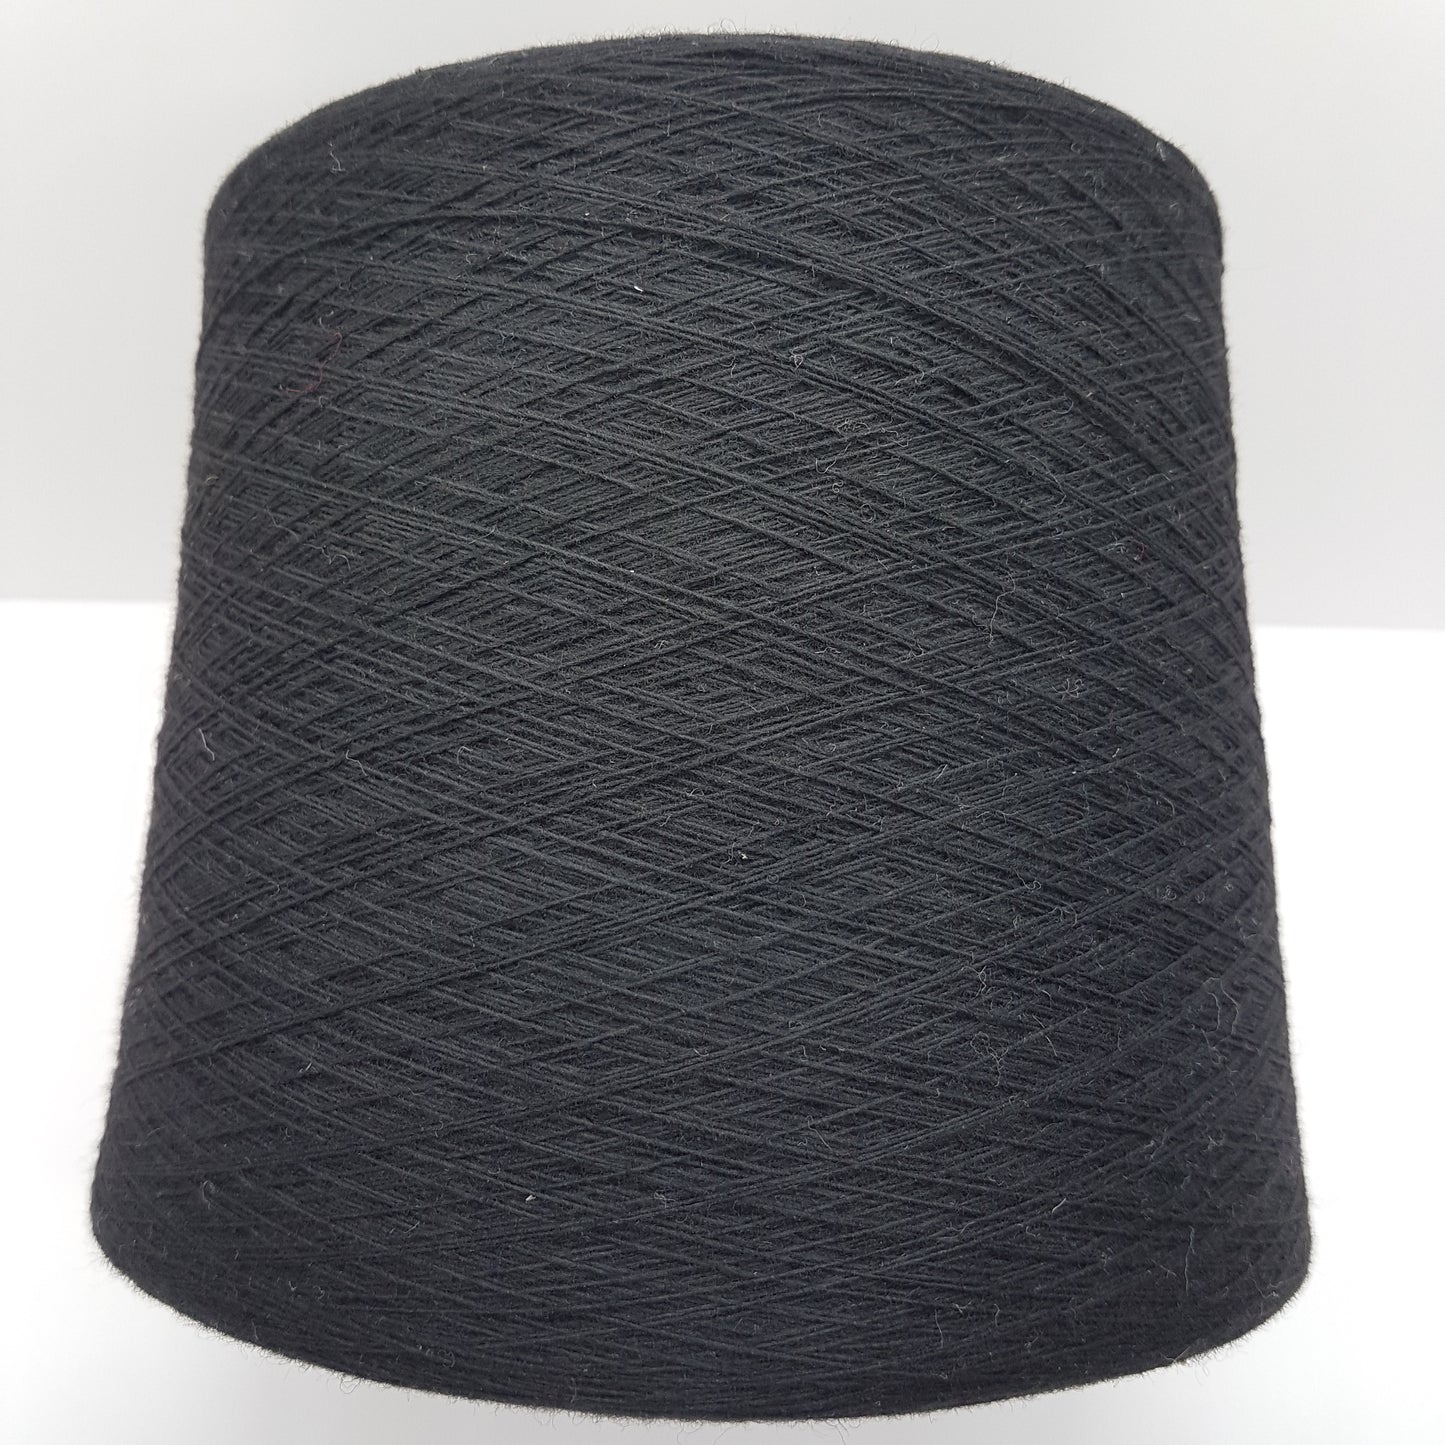 Cashmere Lana Italian yarn black color N.268